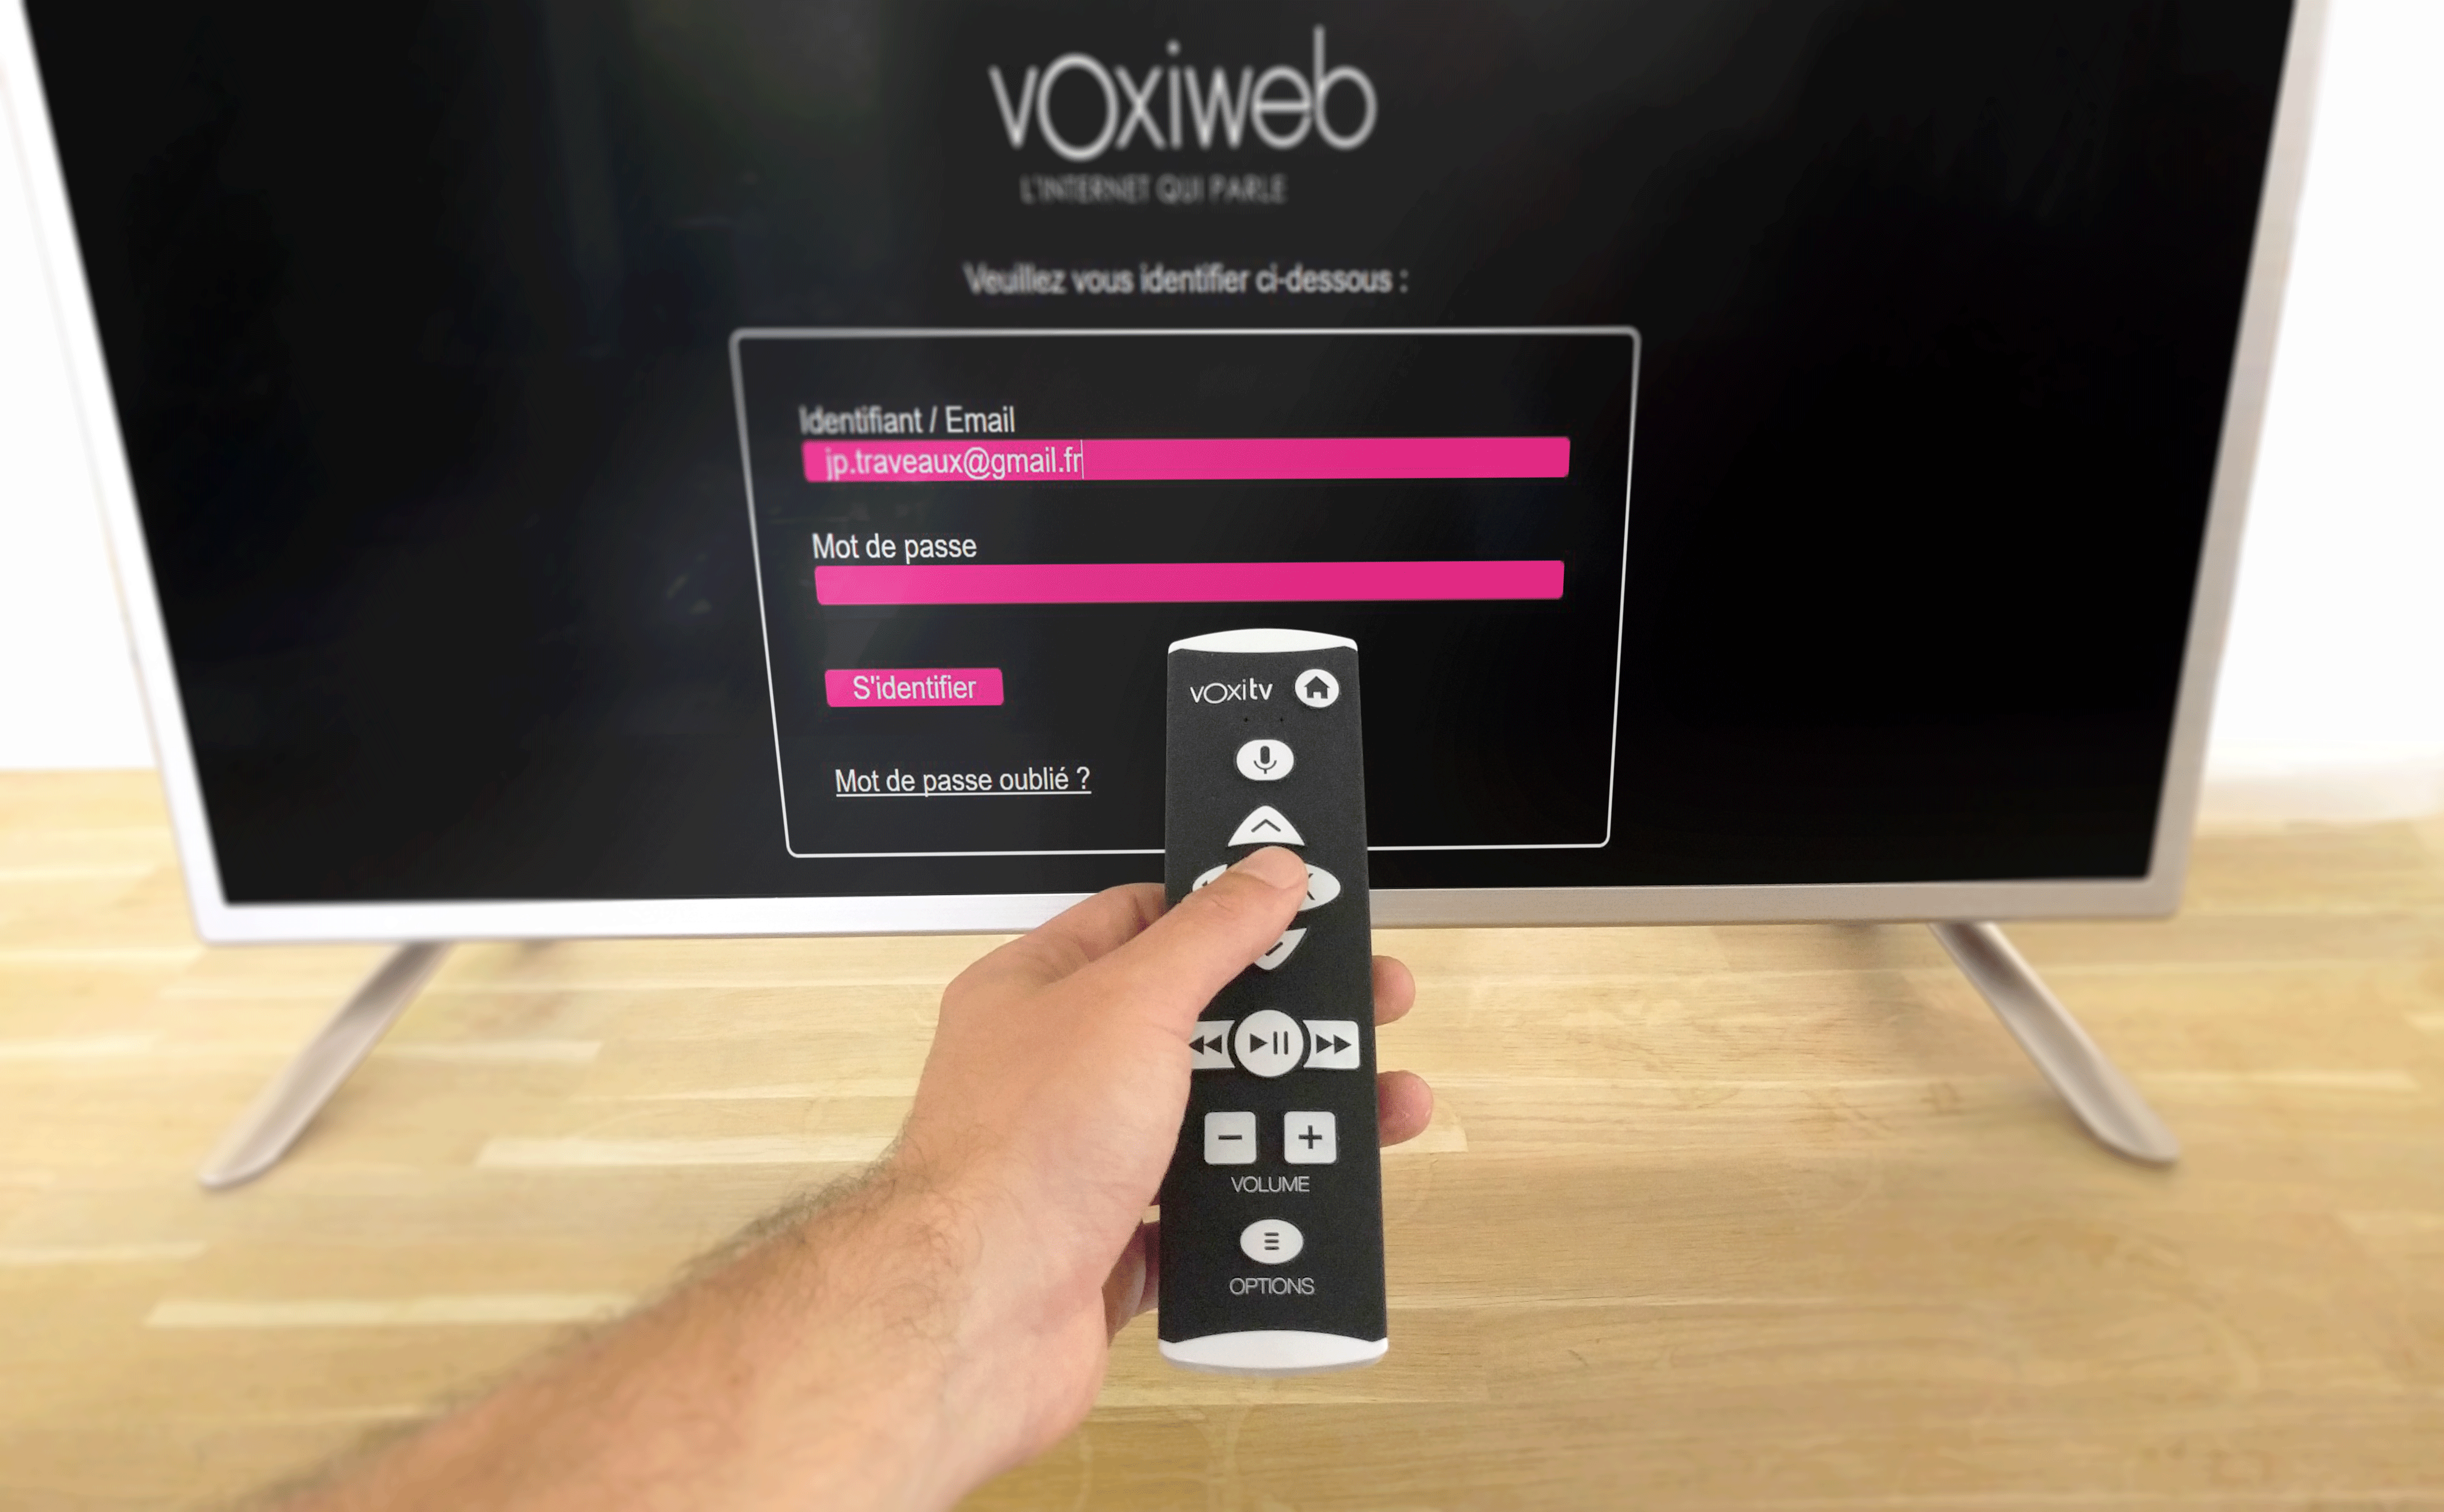 Voxiweb product 01